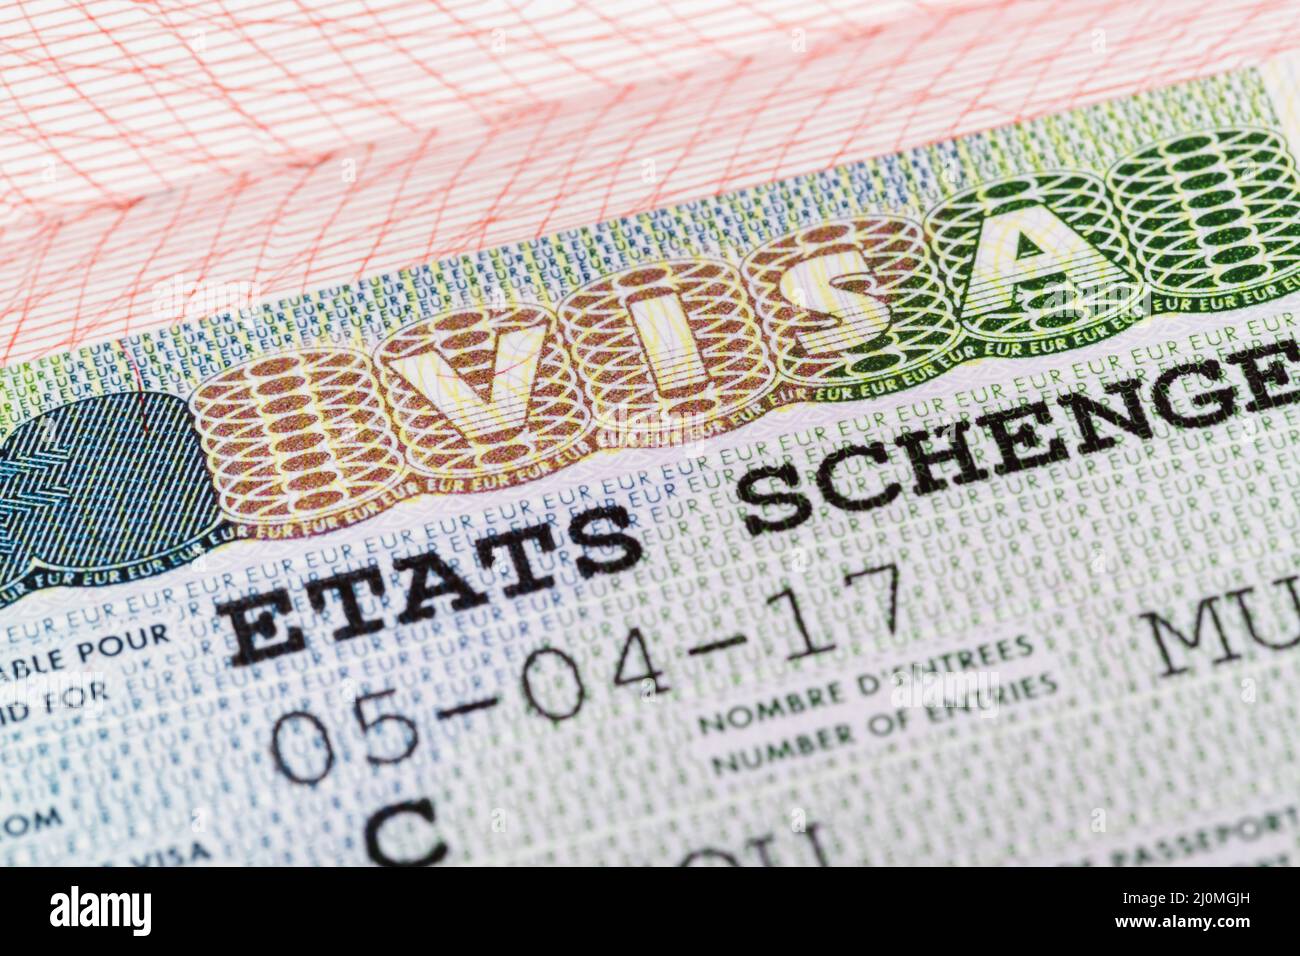 Europe schengen visa in passport Stock Photo - Alamy